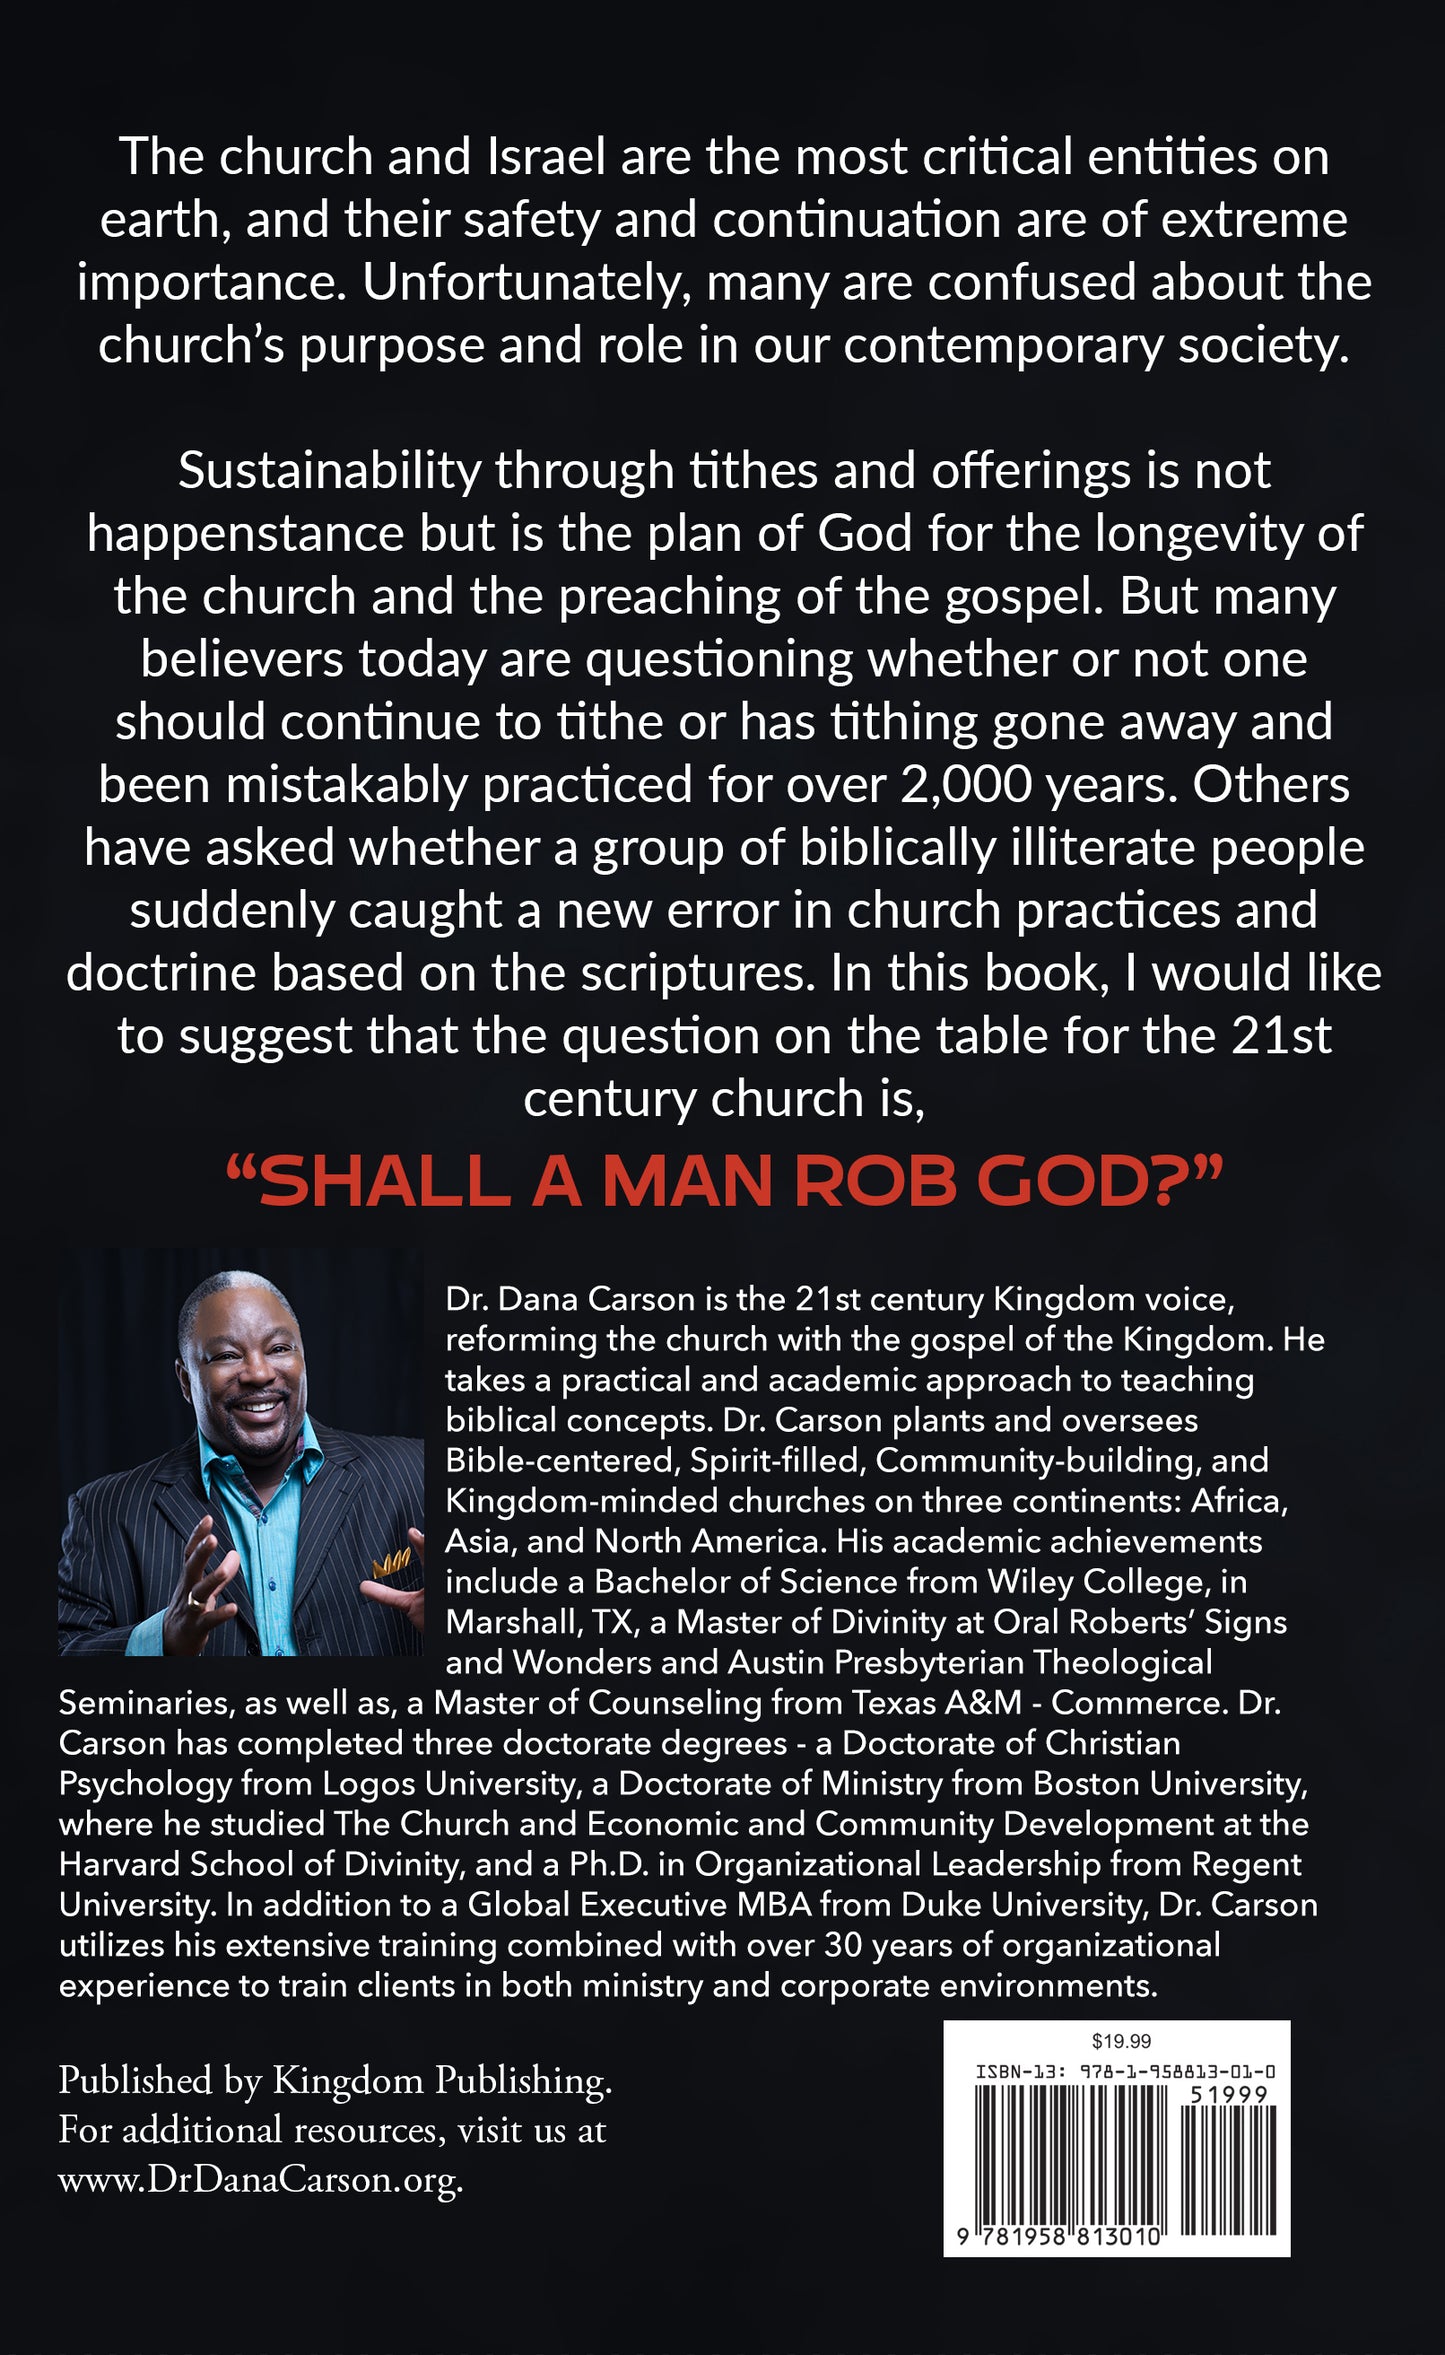 Shall a Man Rob God?: Crooked Christianity